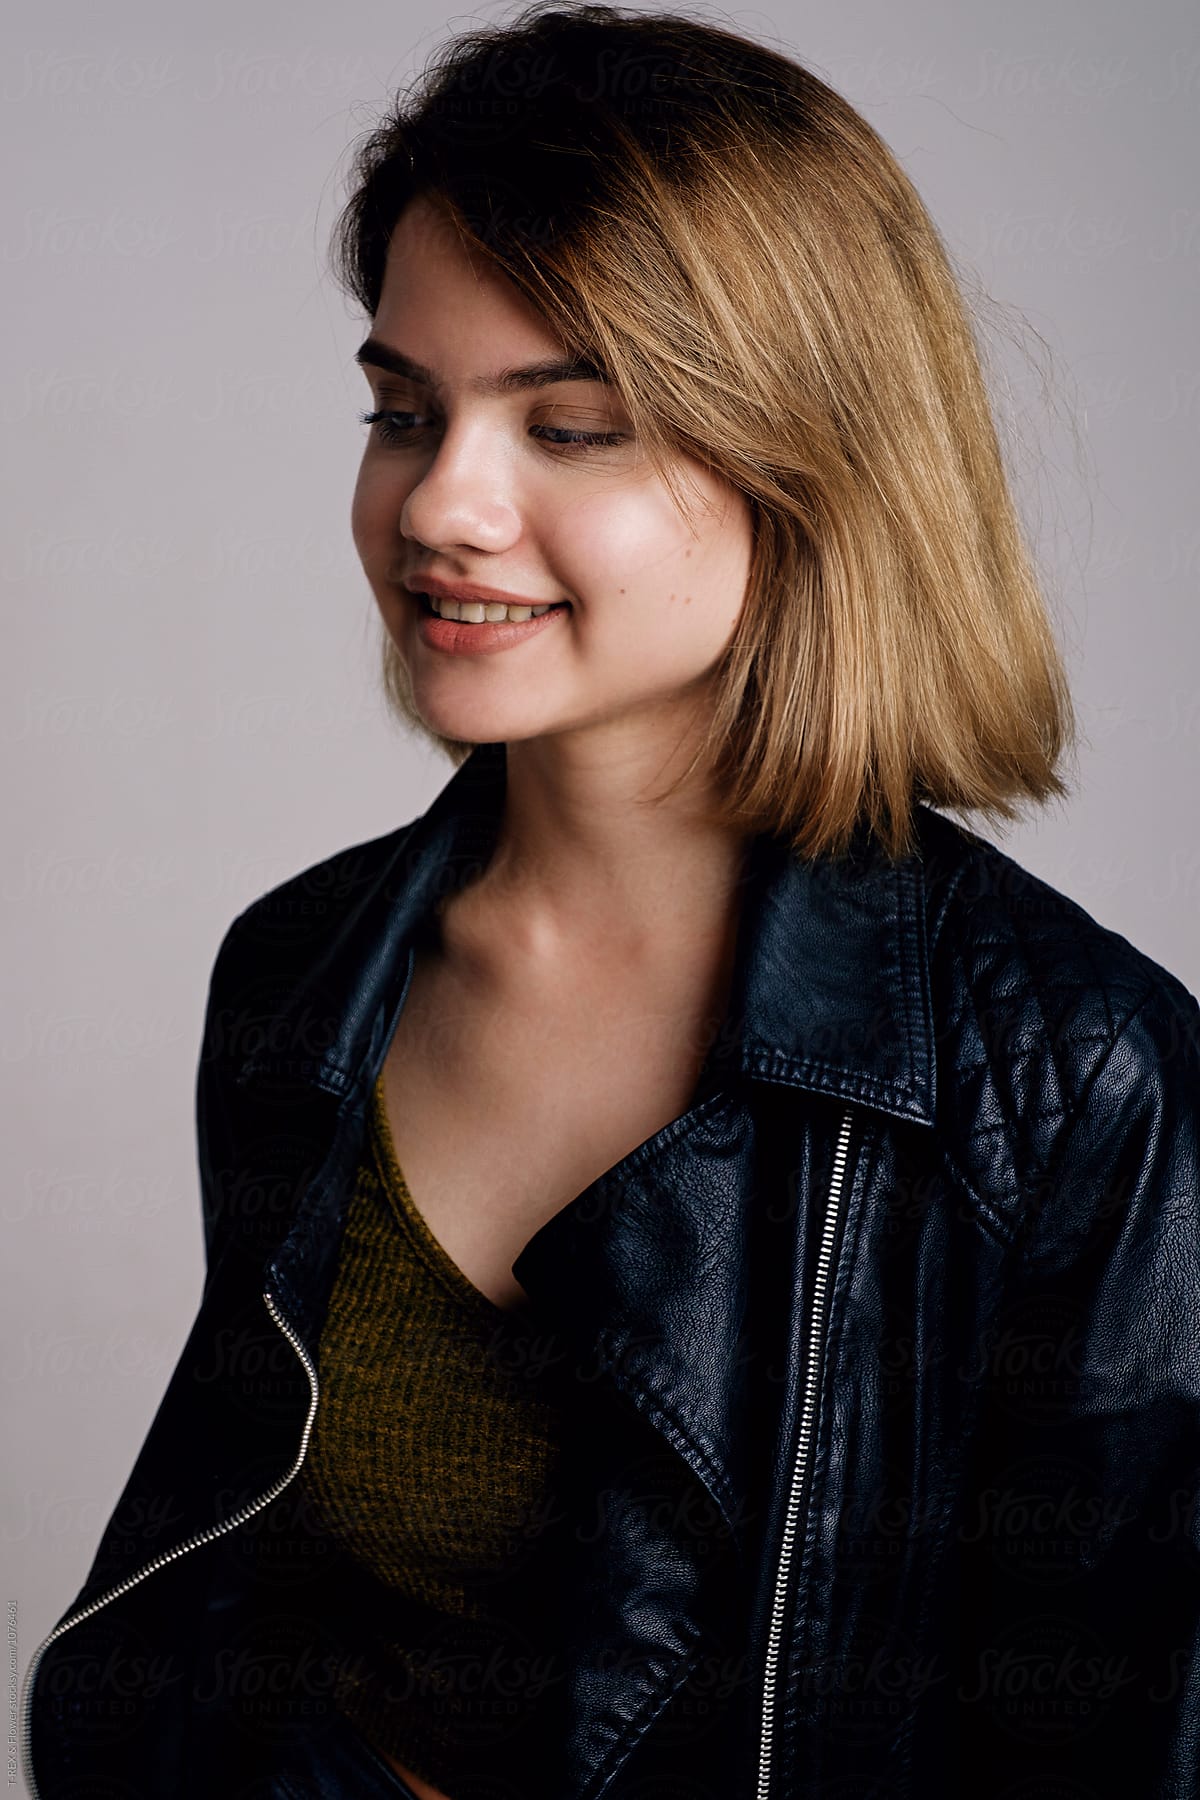 Beautiful Smiling Teen Girl In Leather Jacket By Stocksy Contributor Danil Nevsky Stocksy